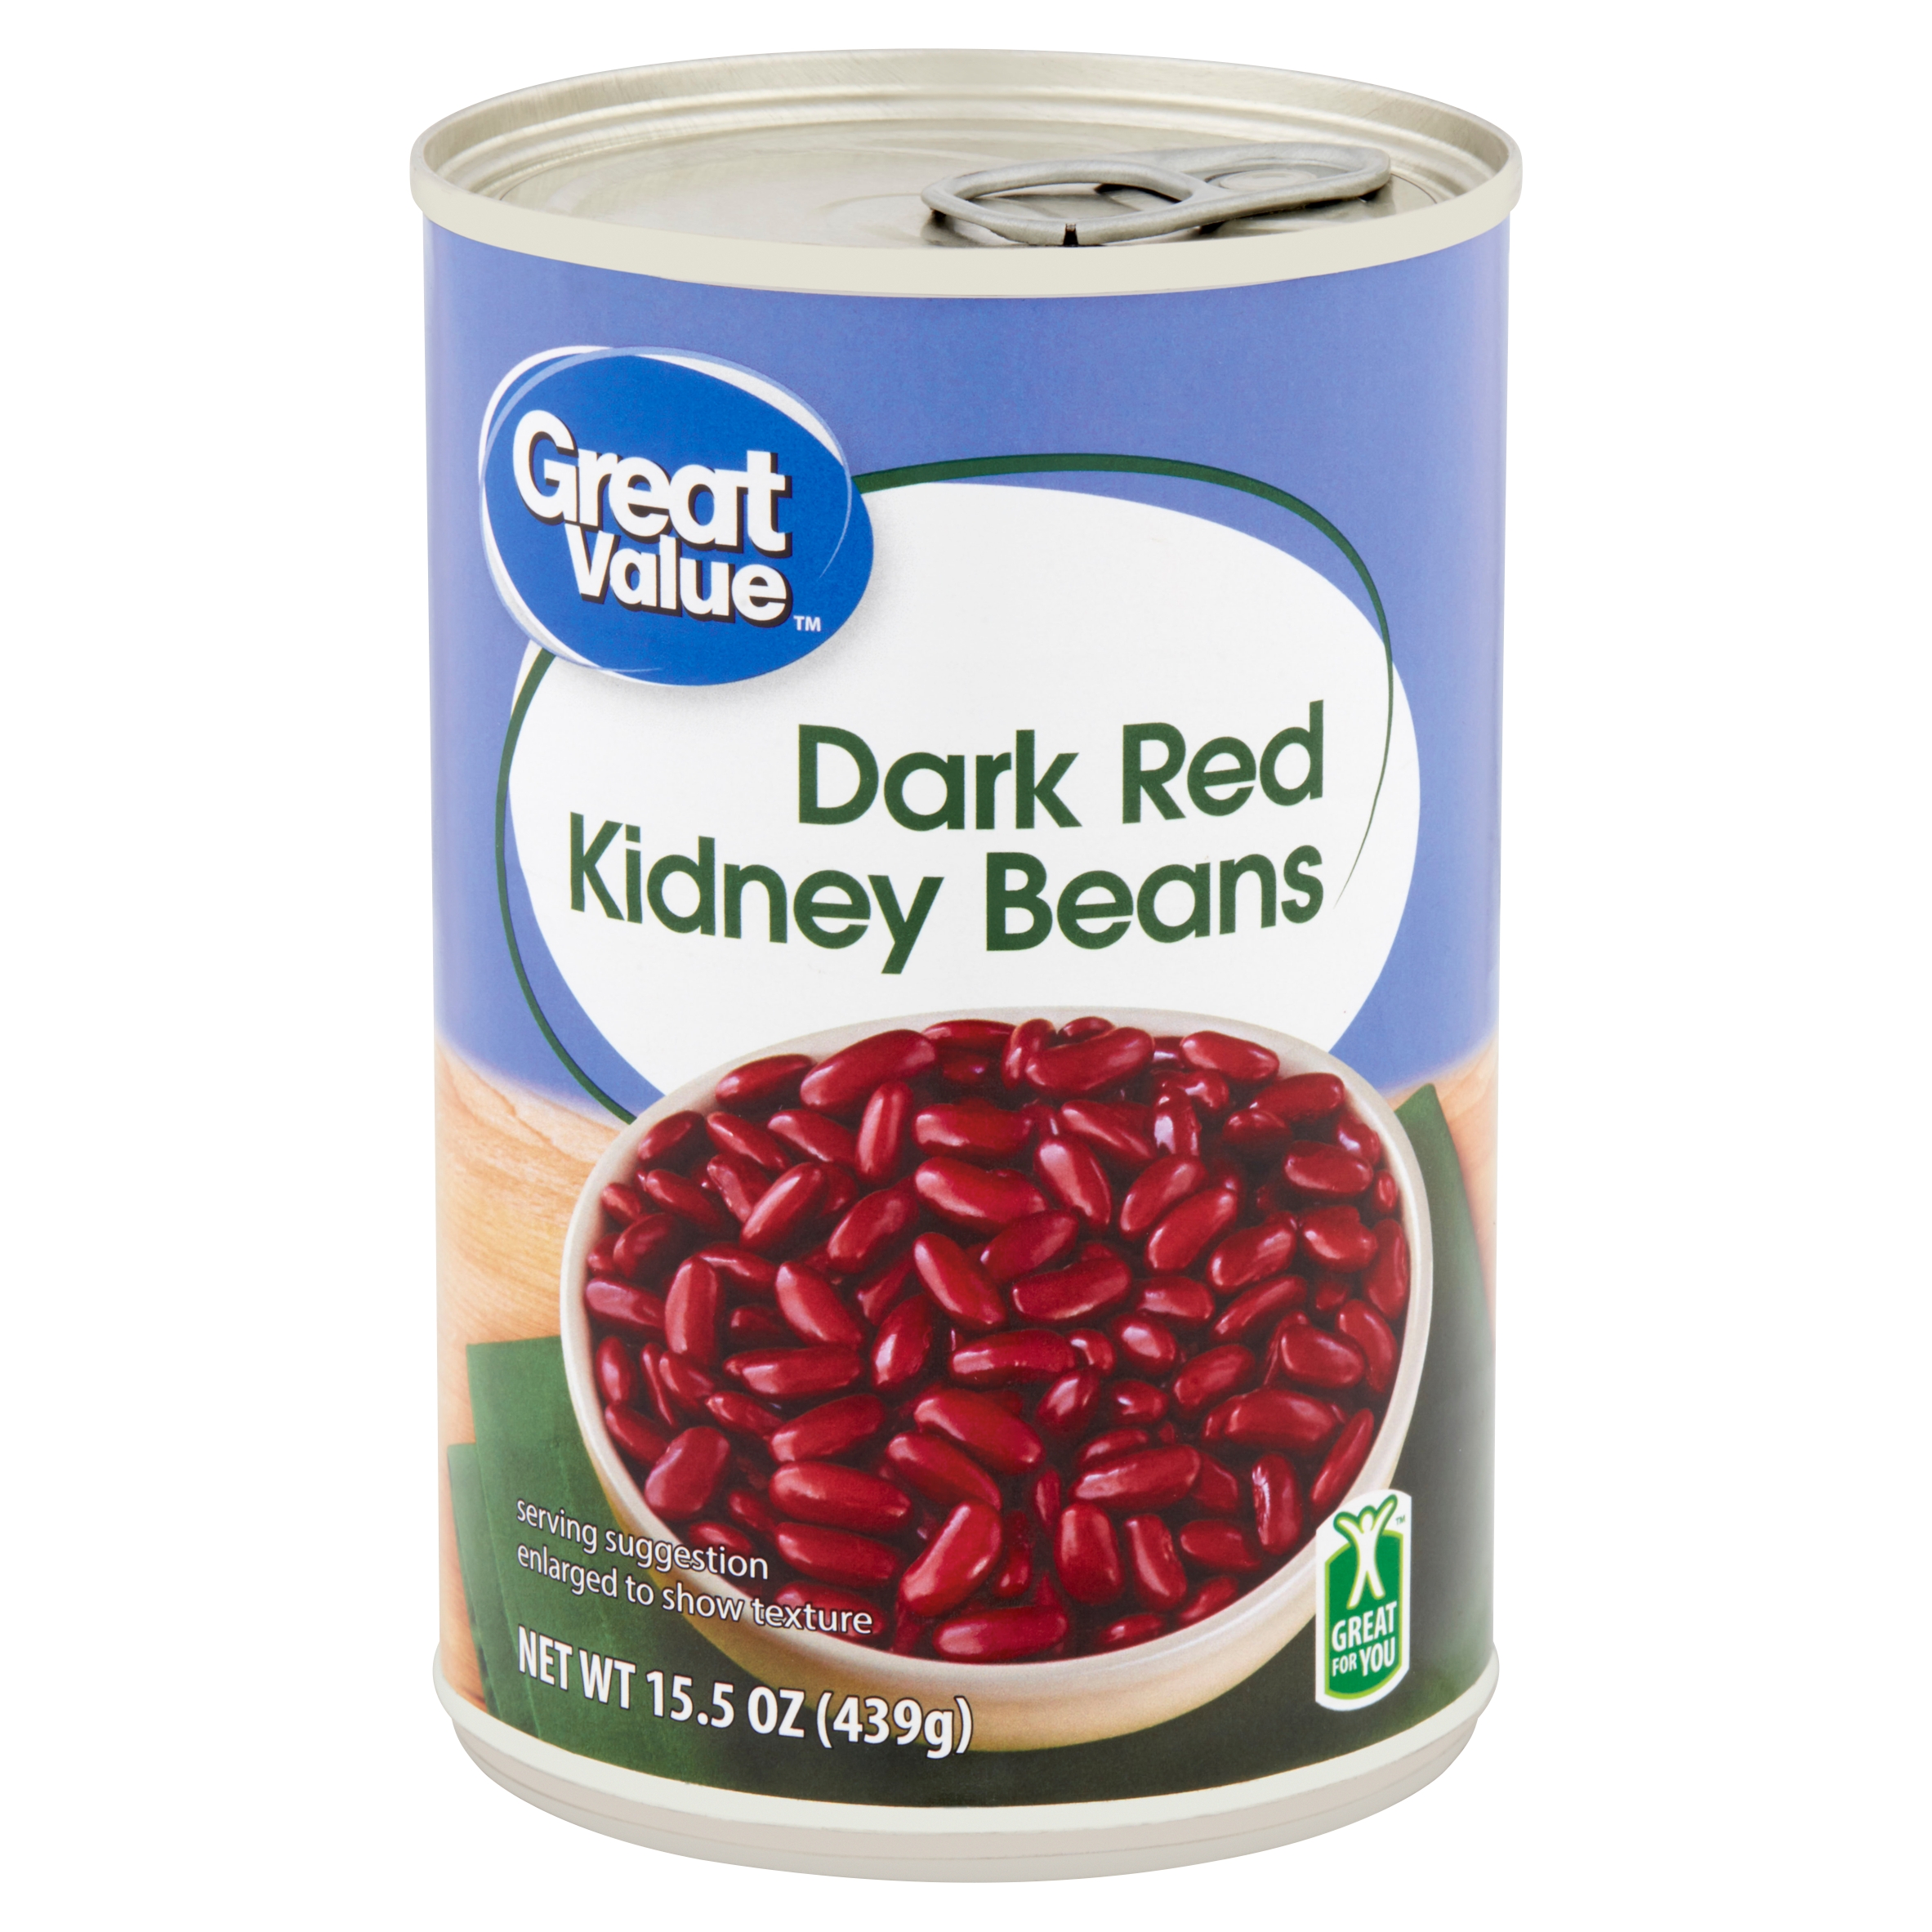 Great Value Dark Red Kidney Beans, 15.5 Oz Image